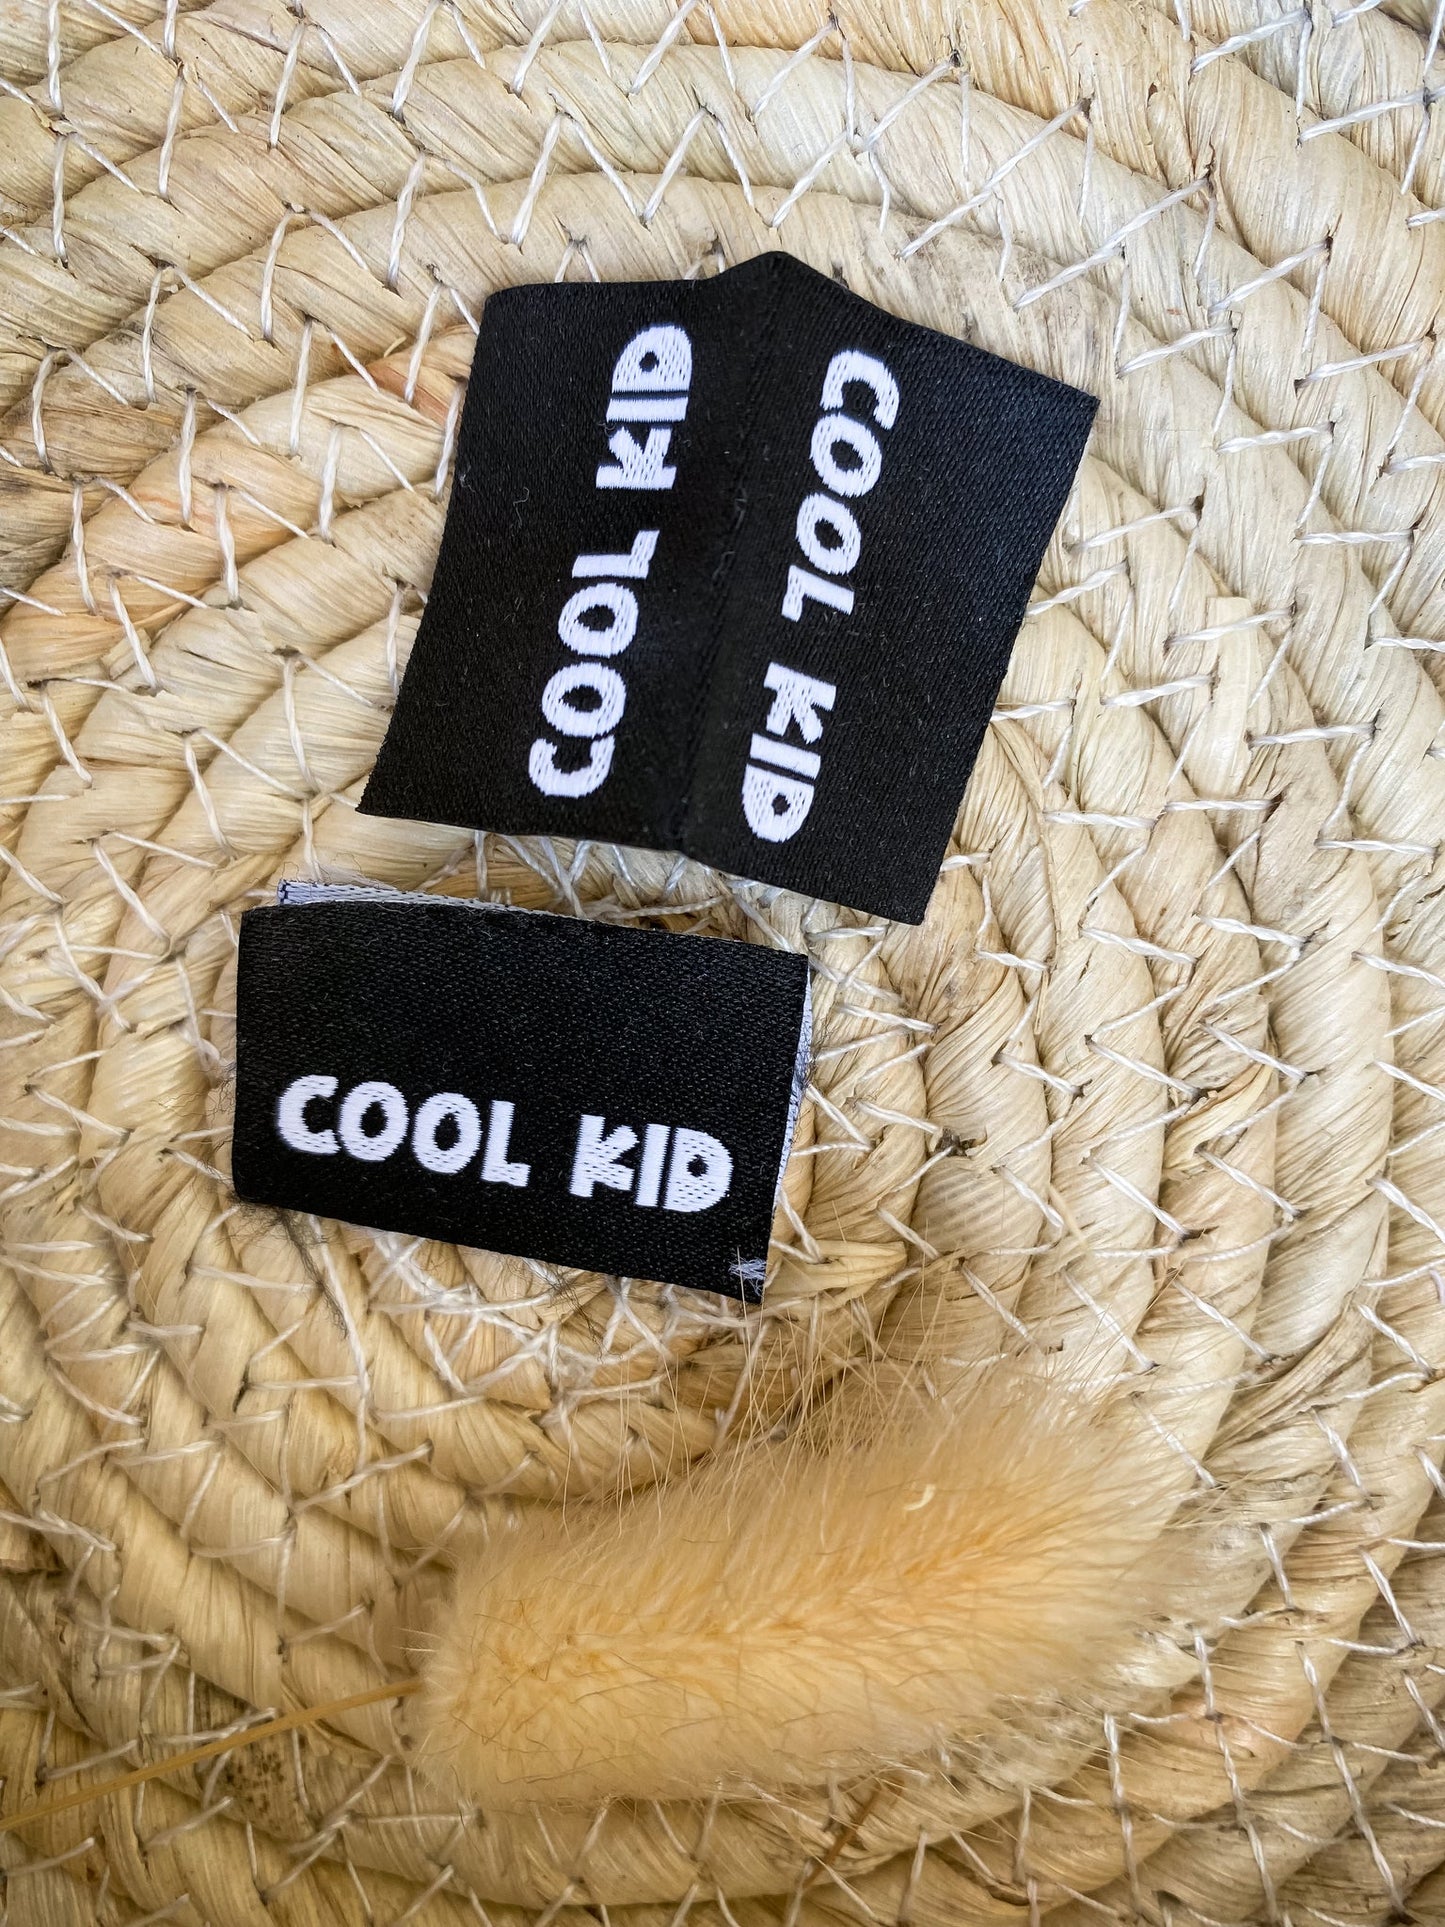 Label Cool kid